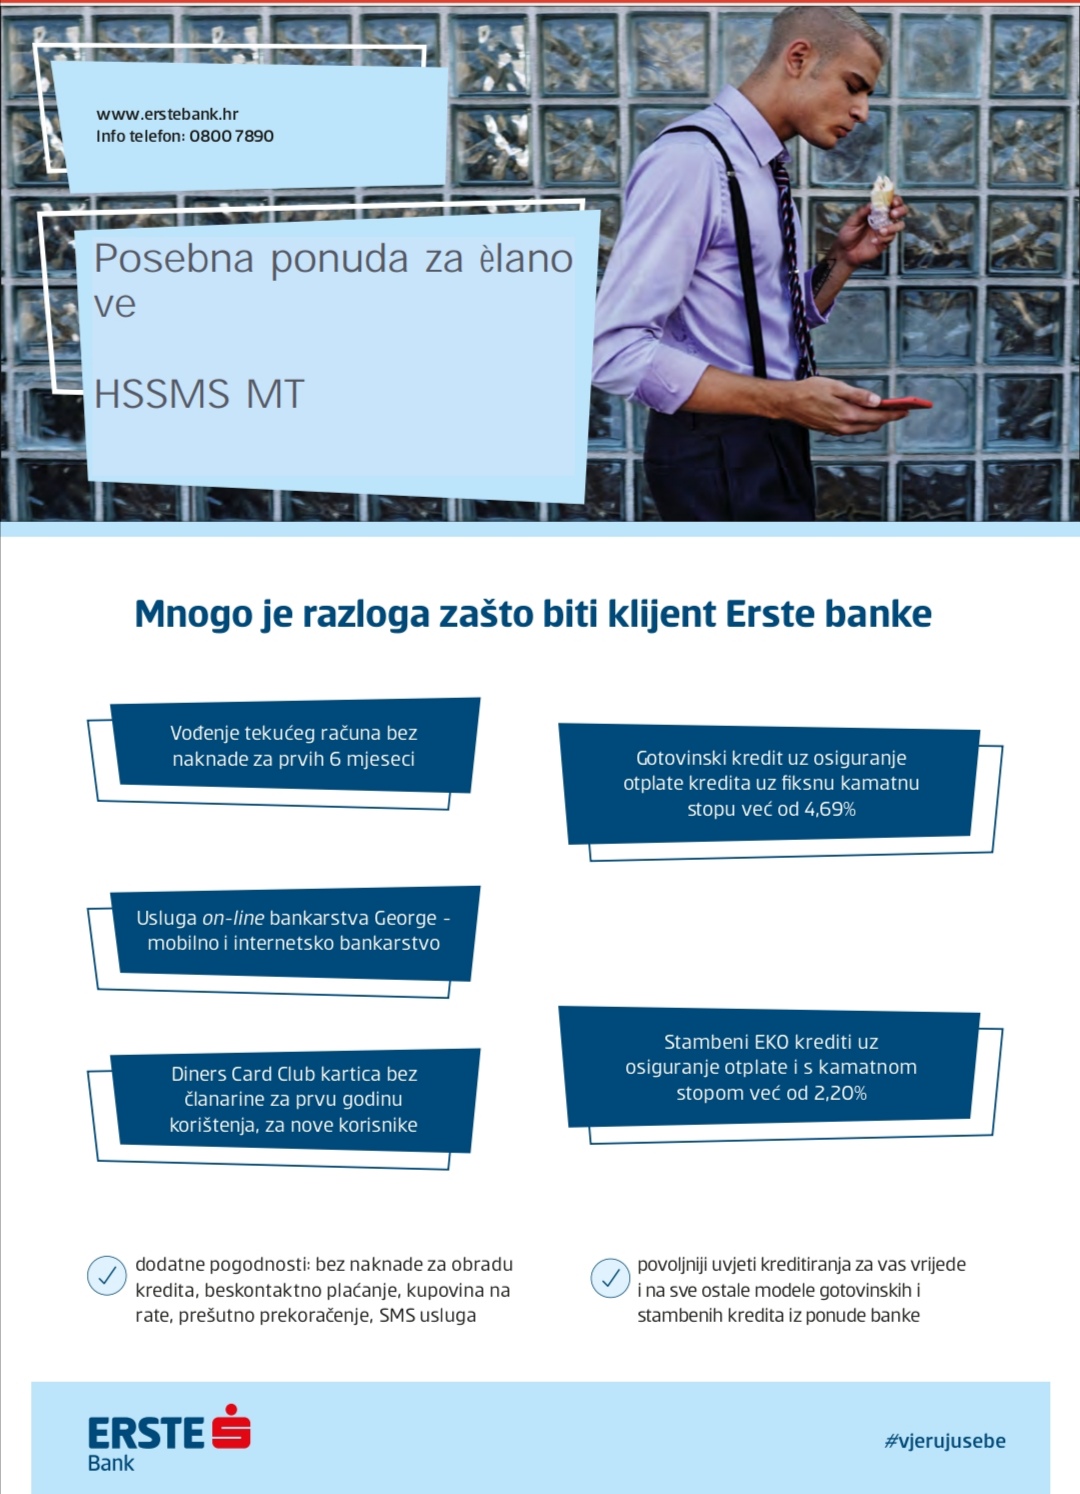 Posebna ponuda Erste banke